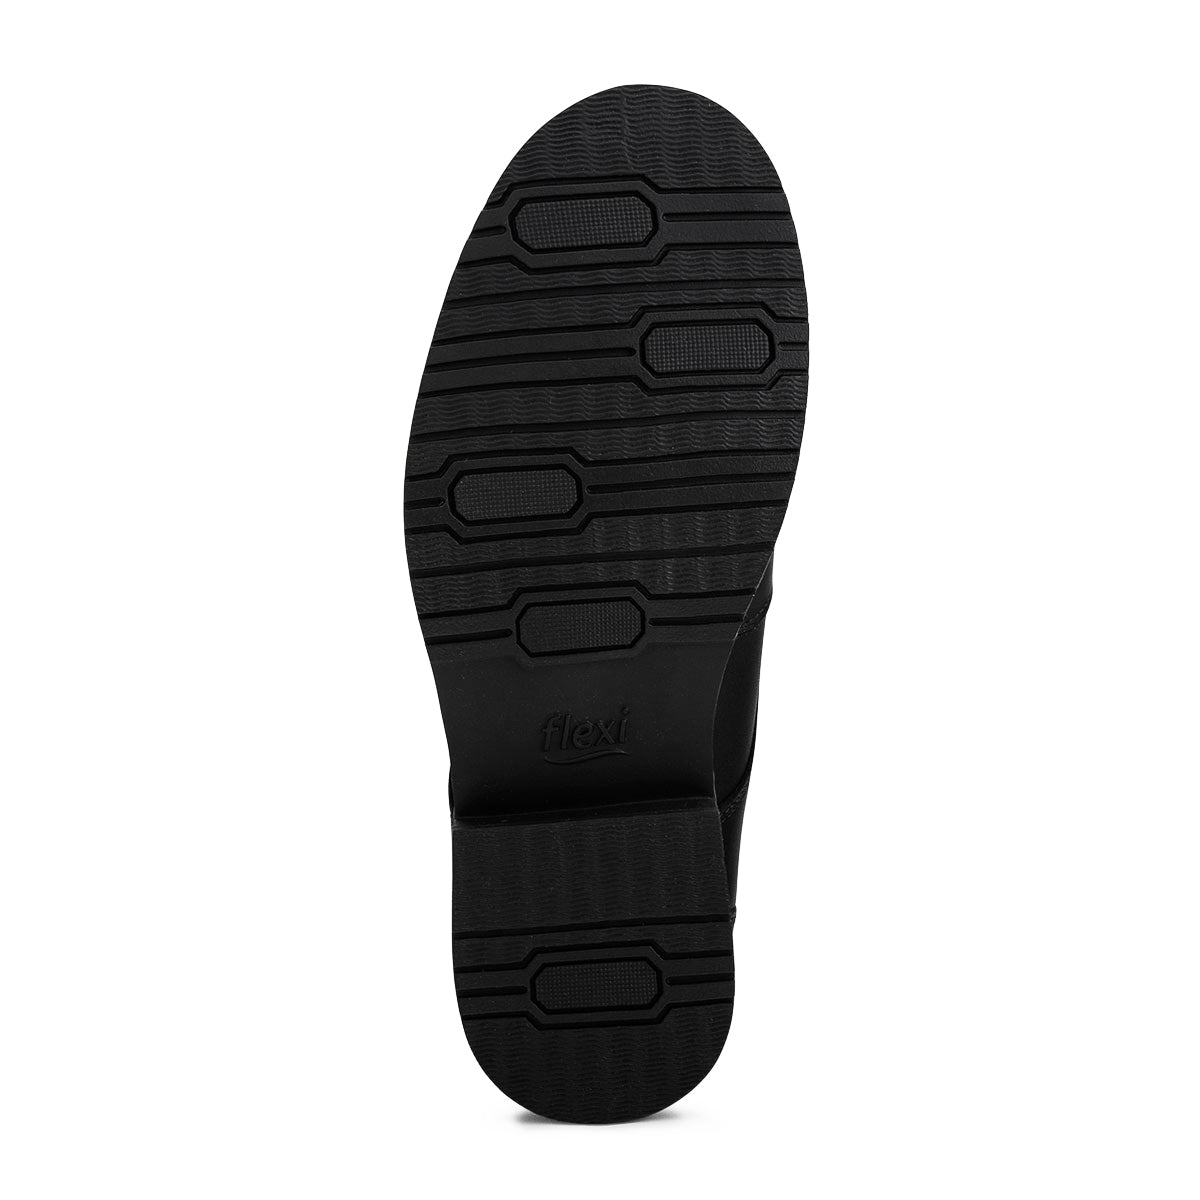 Zapato Vestir Negro Joven Flexi 04201